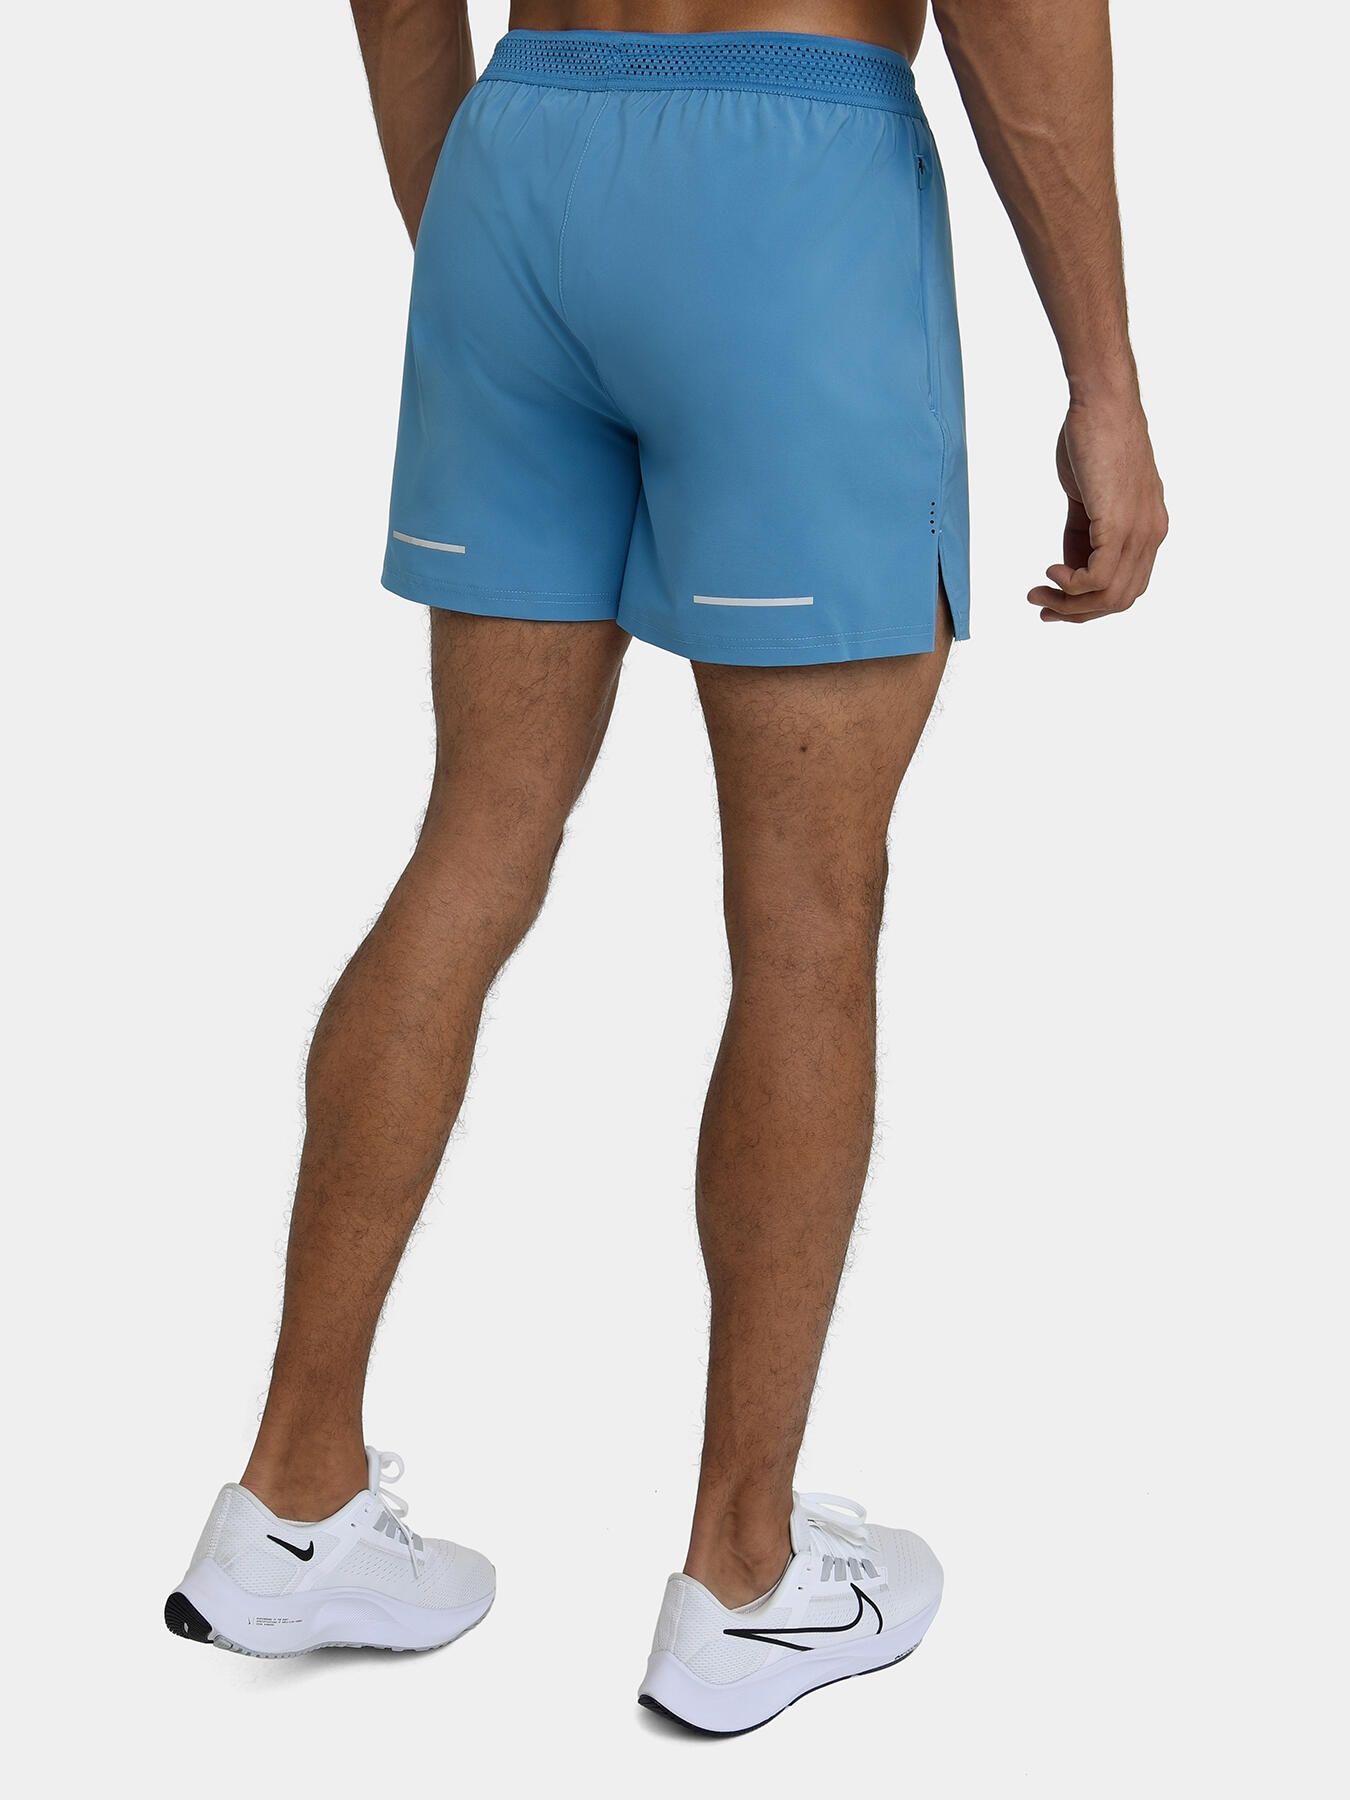 Men's Flyweight Running Shorts with Zipped Pockets - Powder Blue 2/5